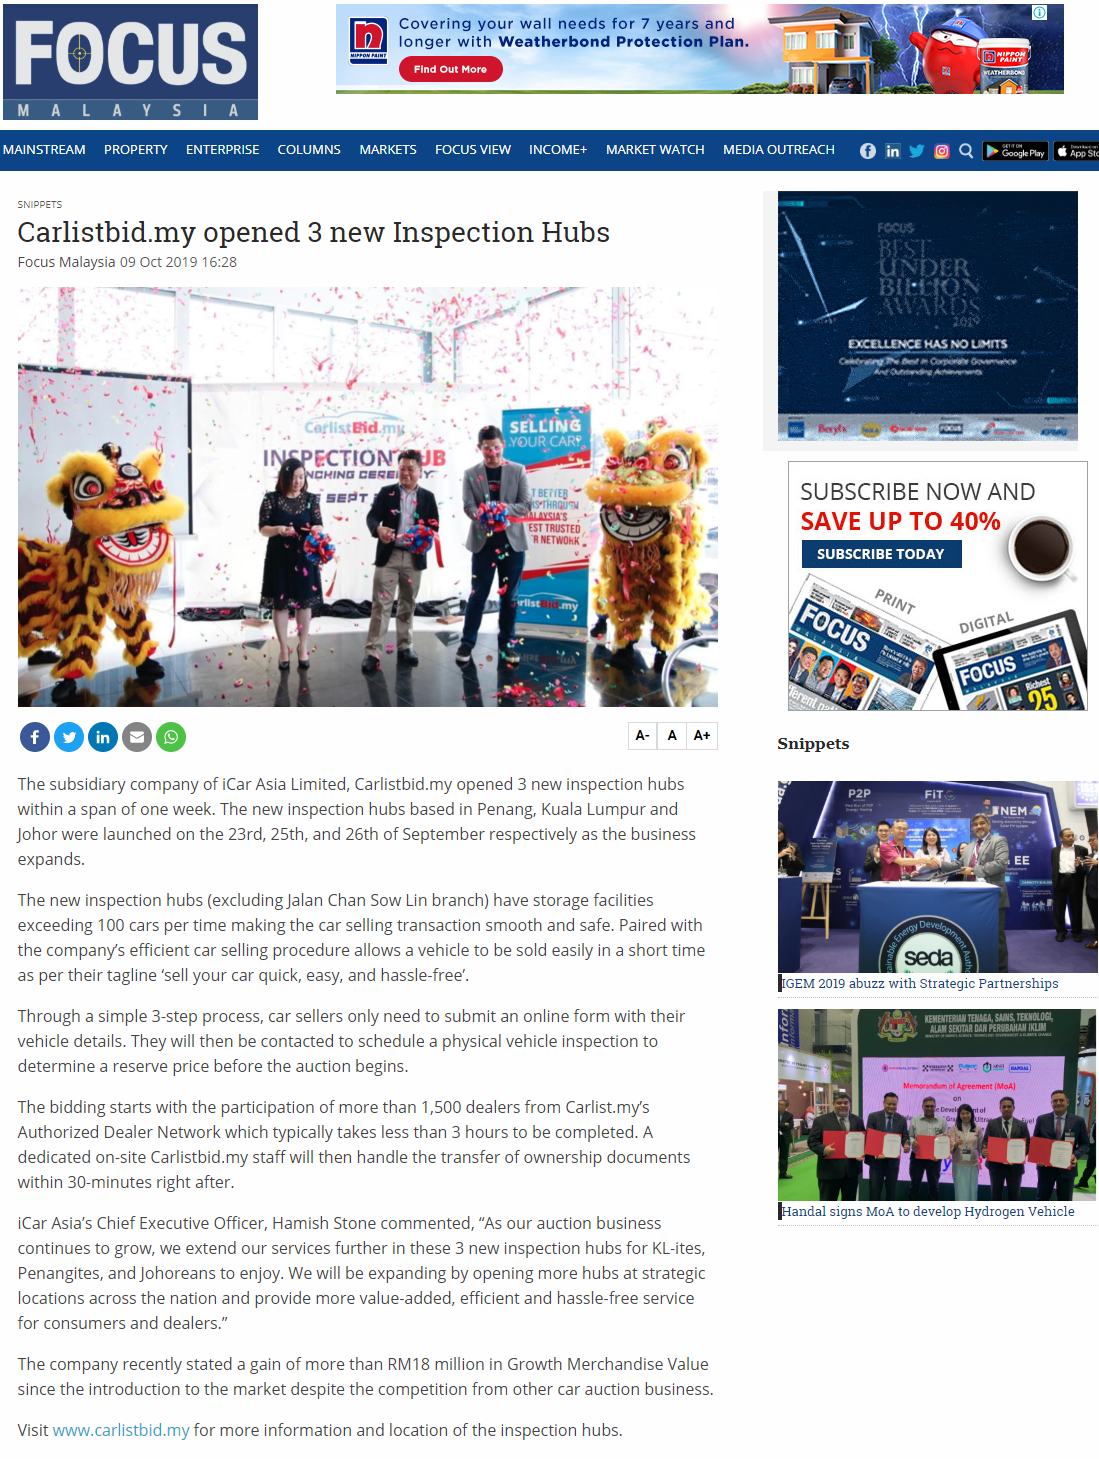 iCarAsia Press Release